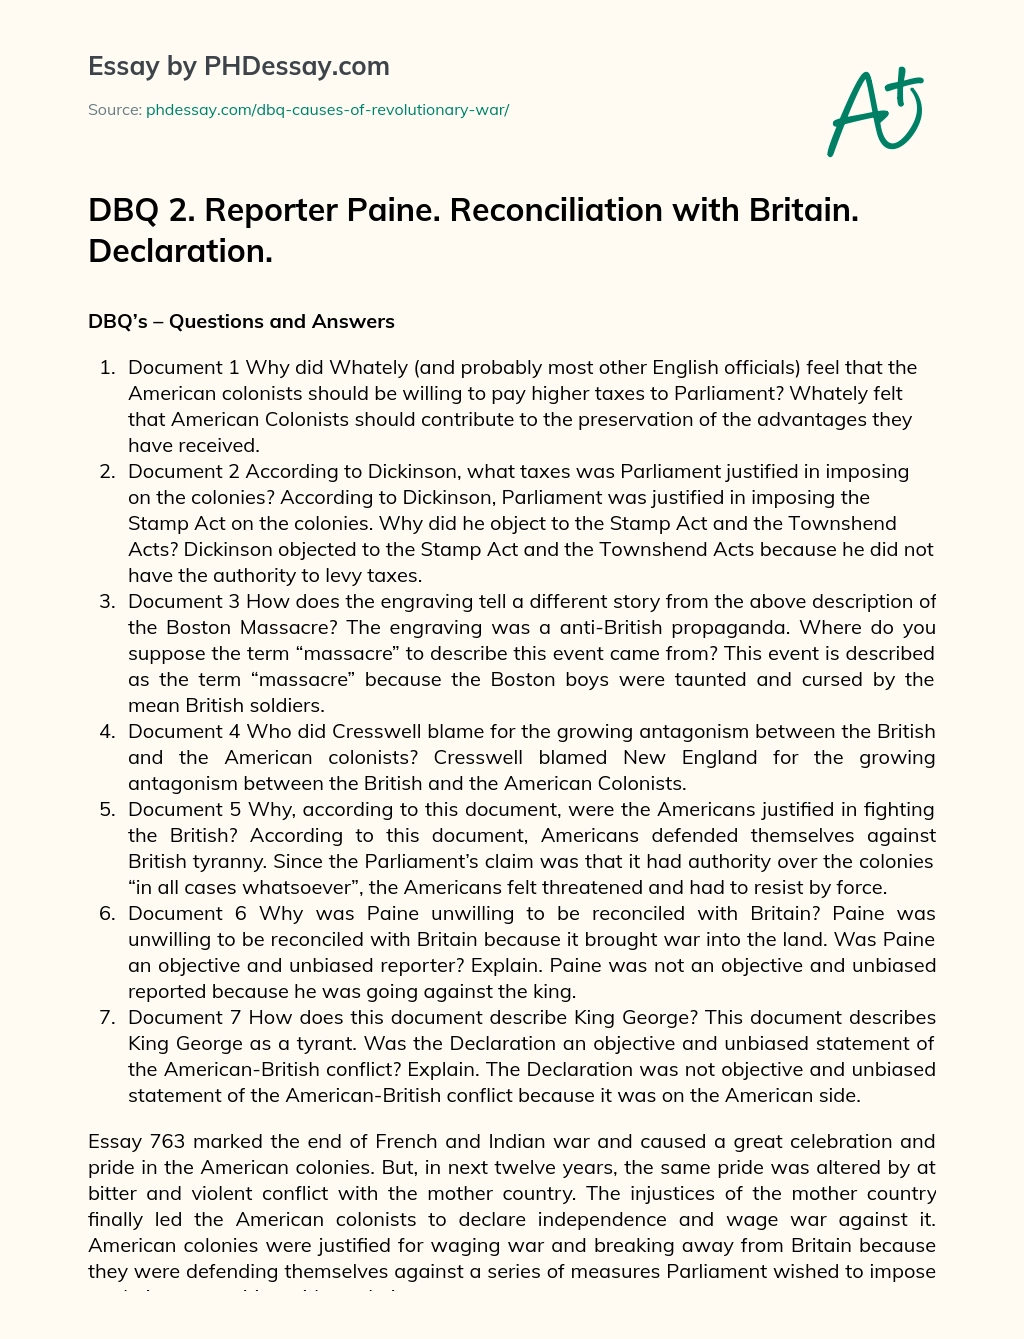 DBQ 2. Reporter Paine. Reconciliation with Britain. Declaration. essay